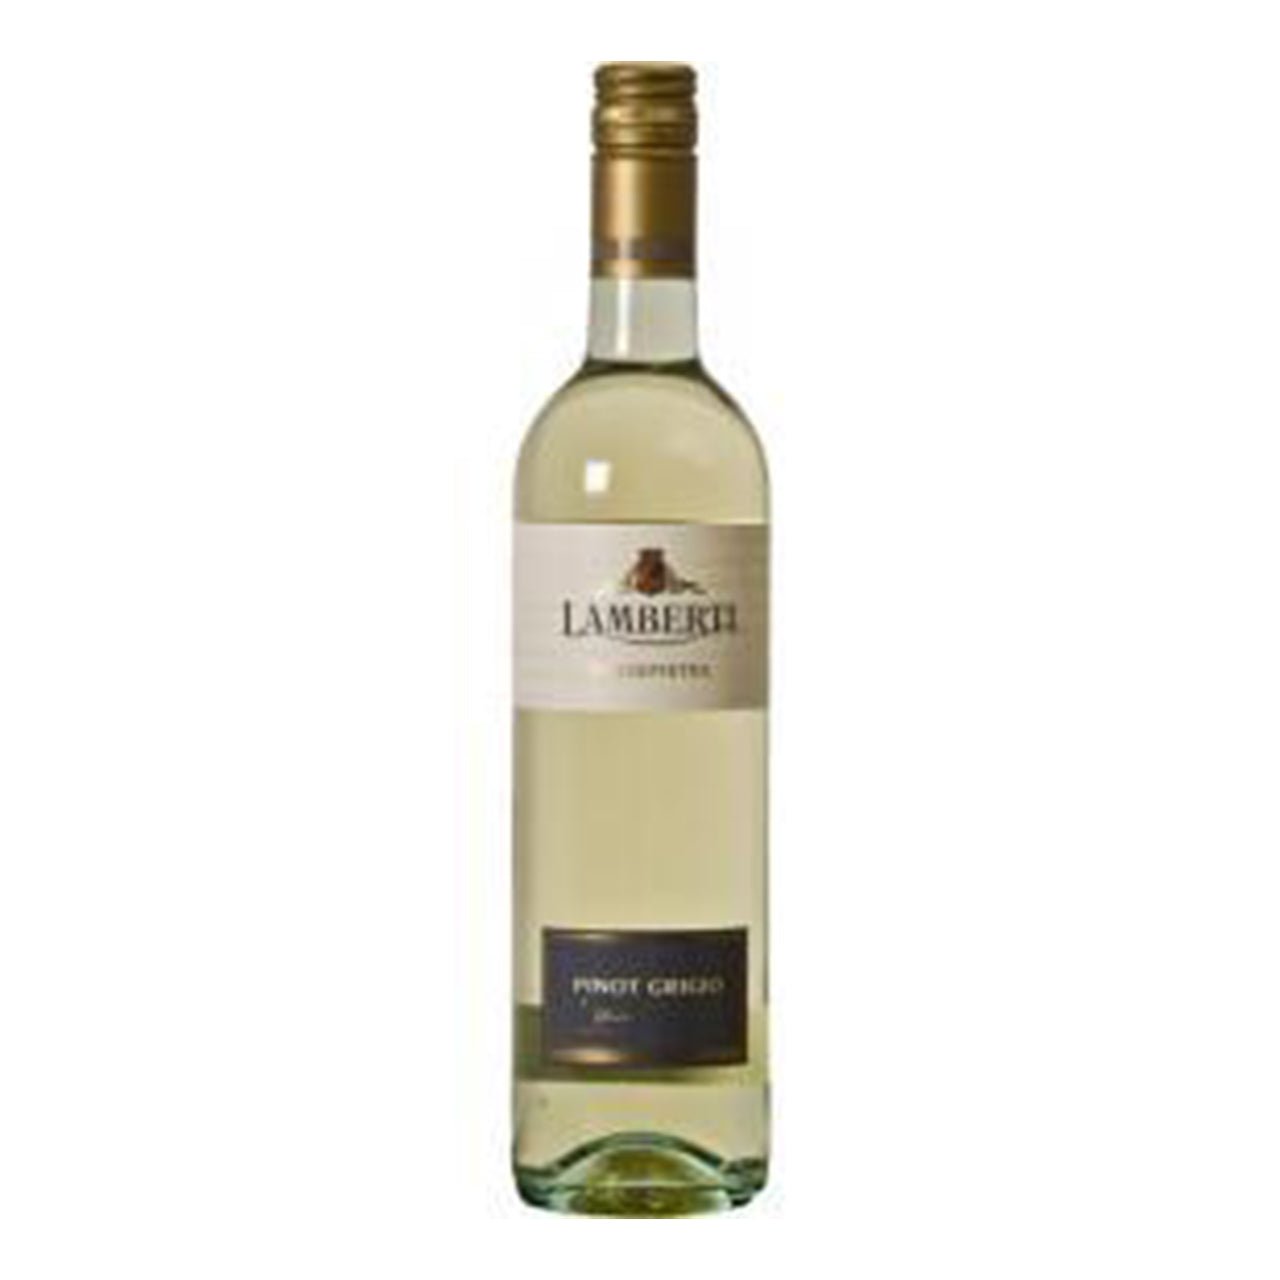 Lamberti Santepietre Pinot Grigio delle Venezie 2021 - Wine Italy White - Liquor Wine Cave